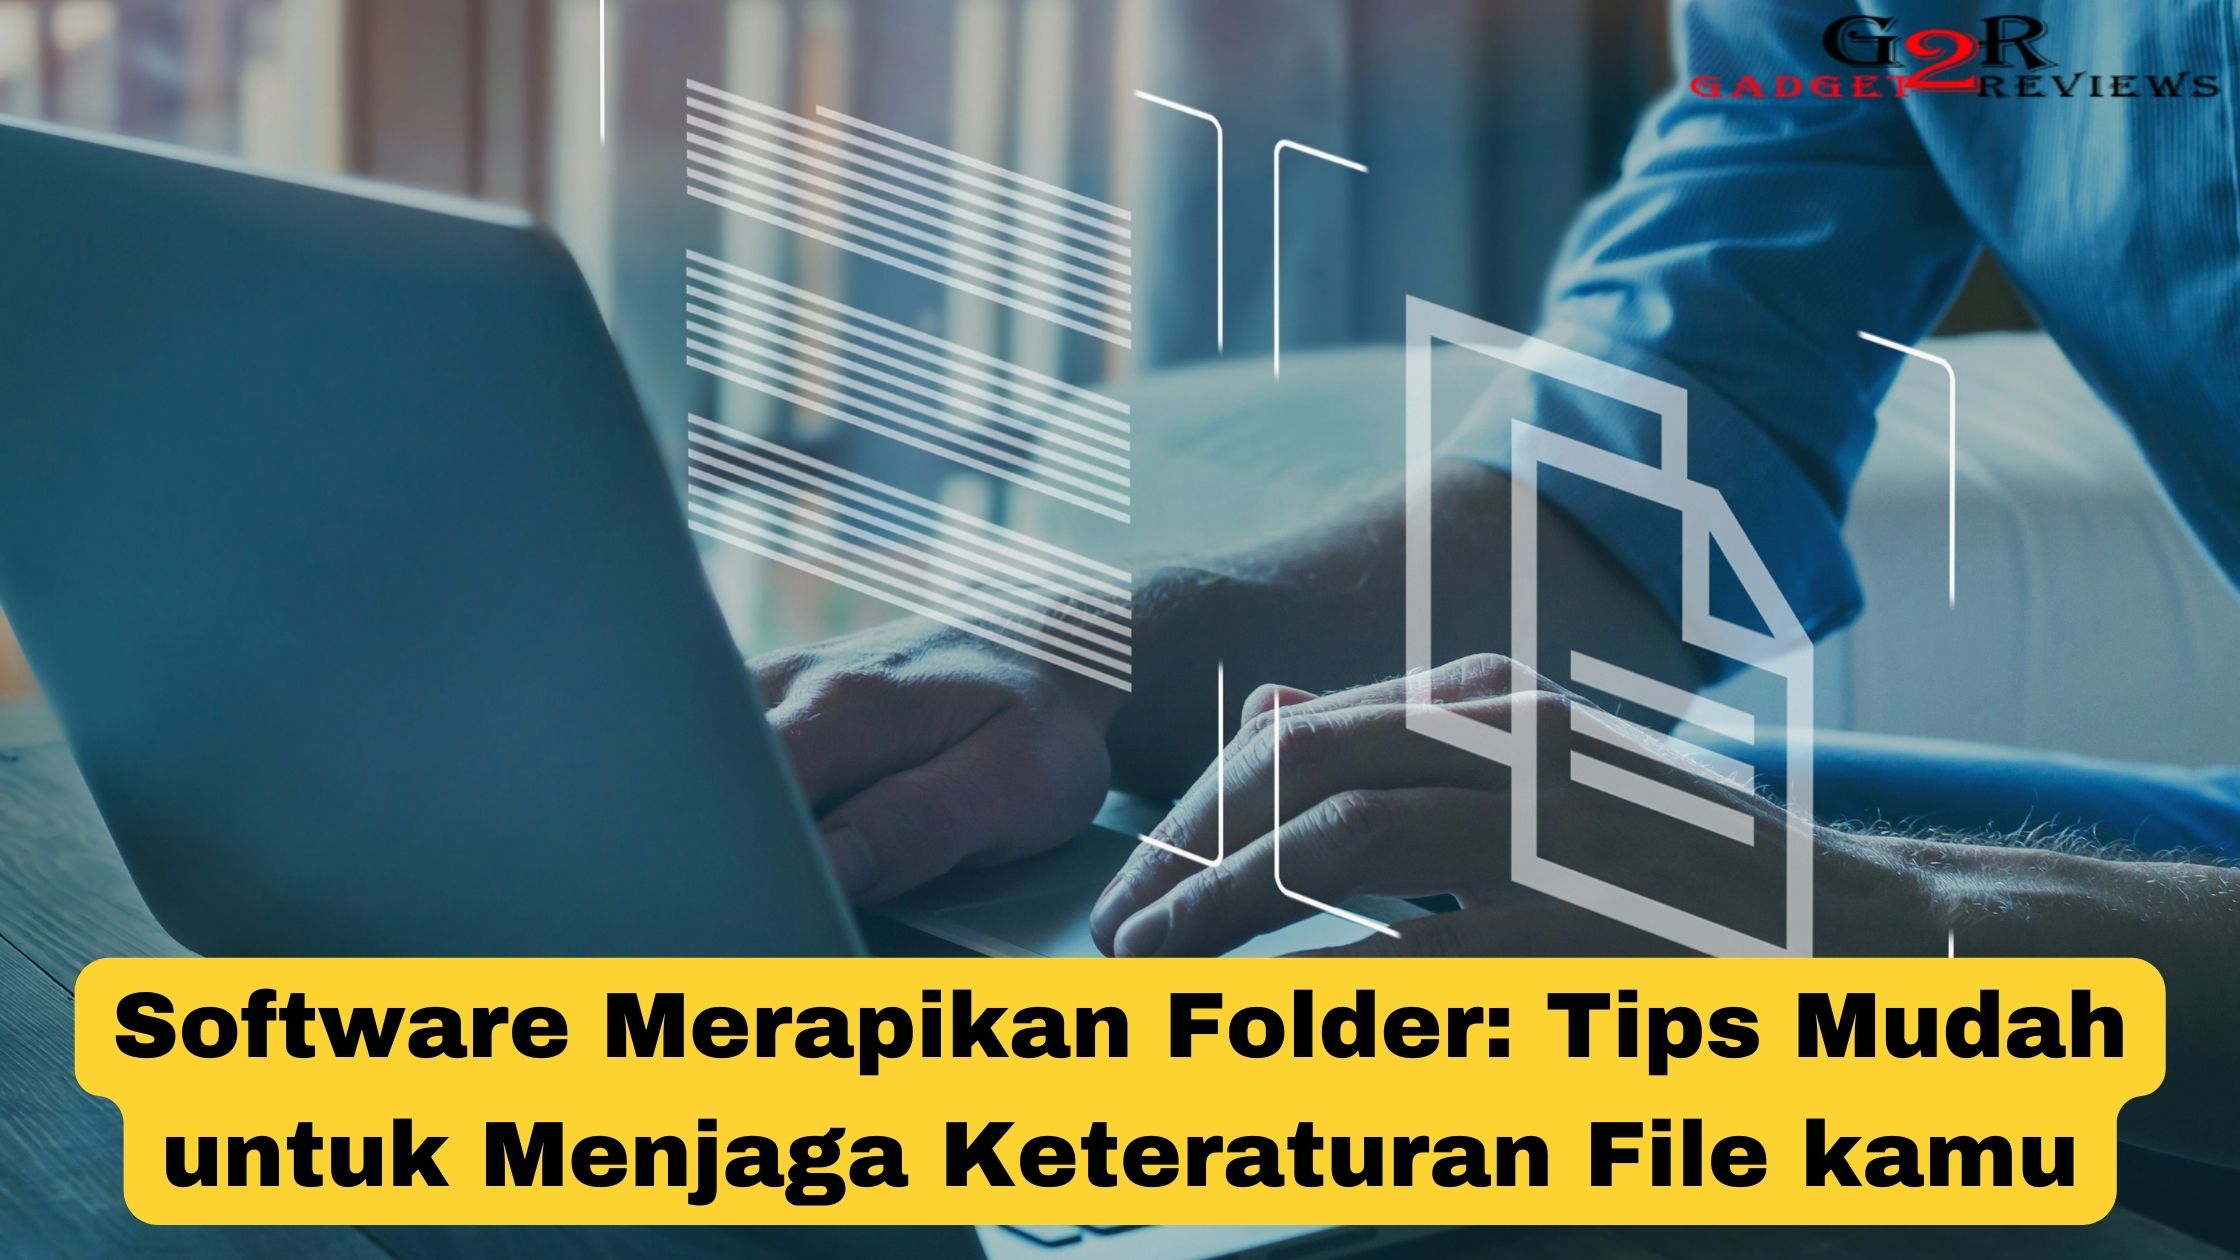 Software Merapikan Folder